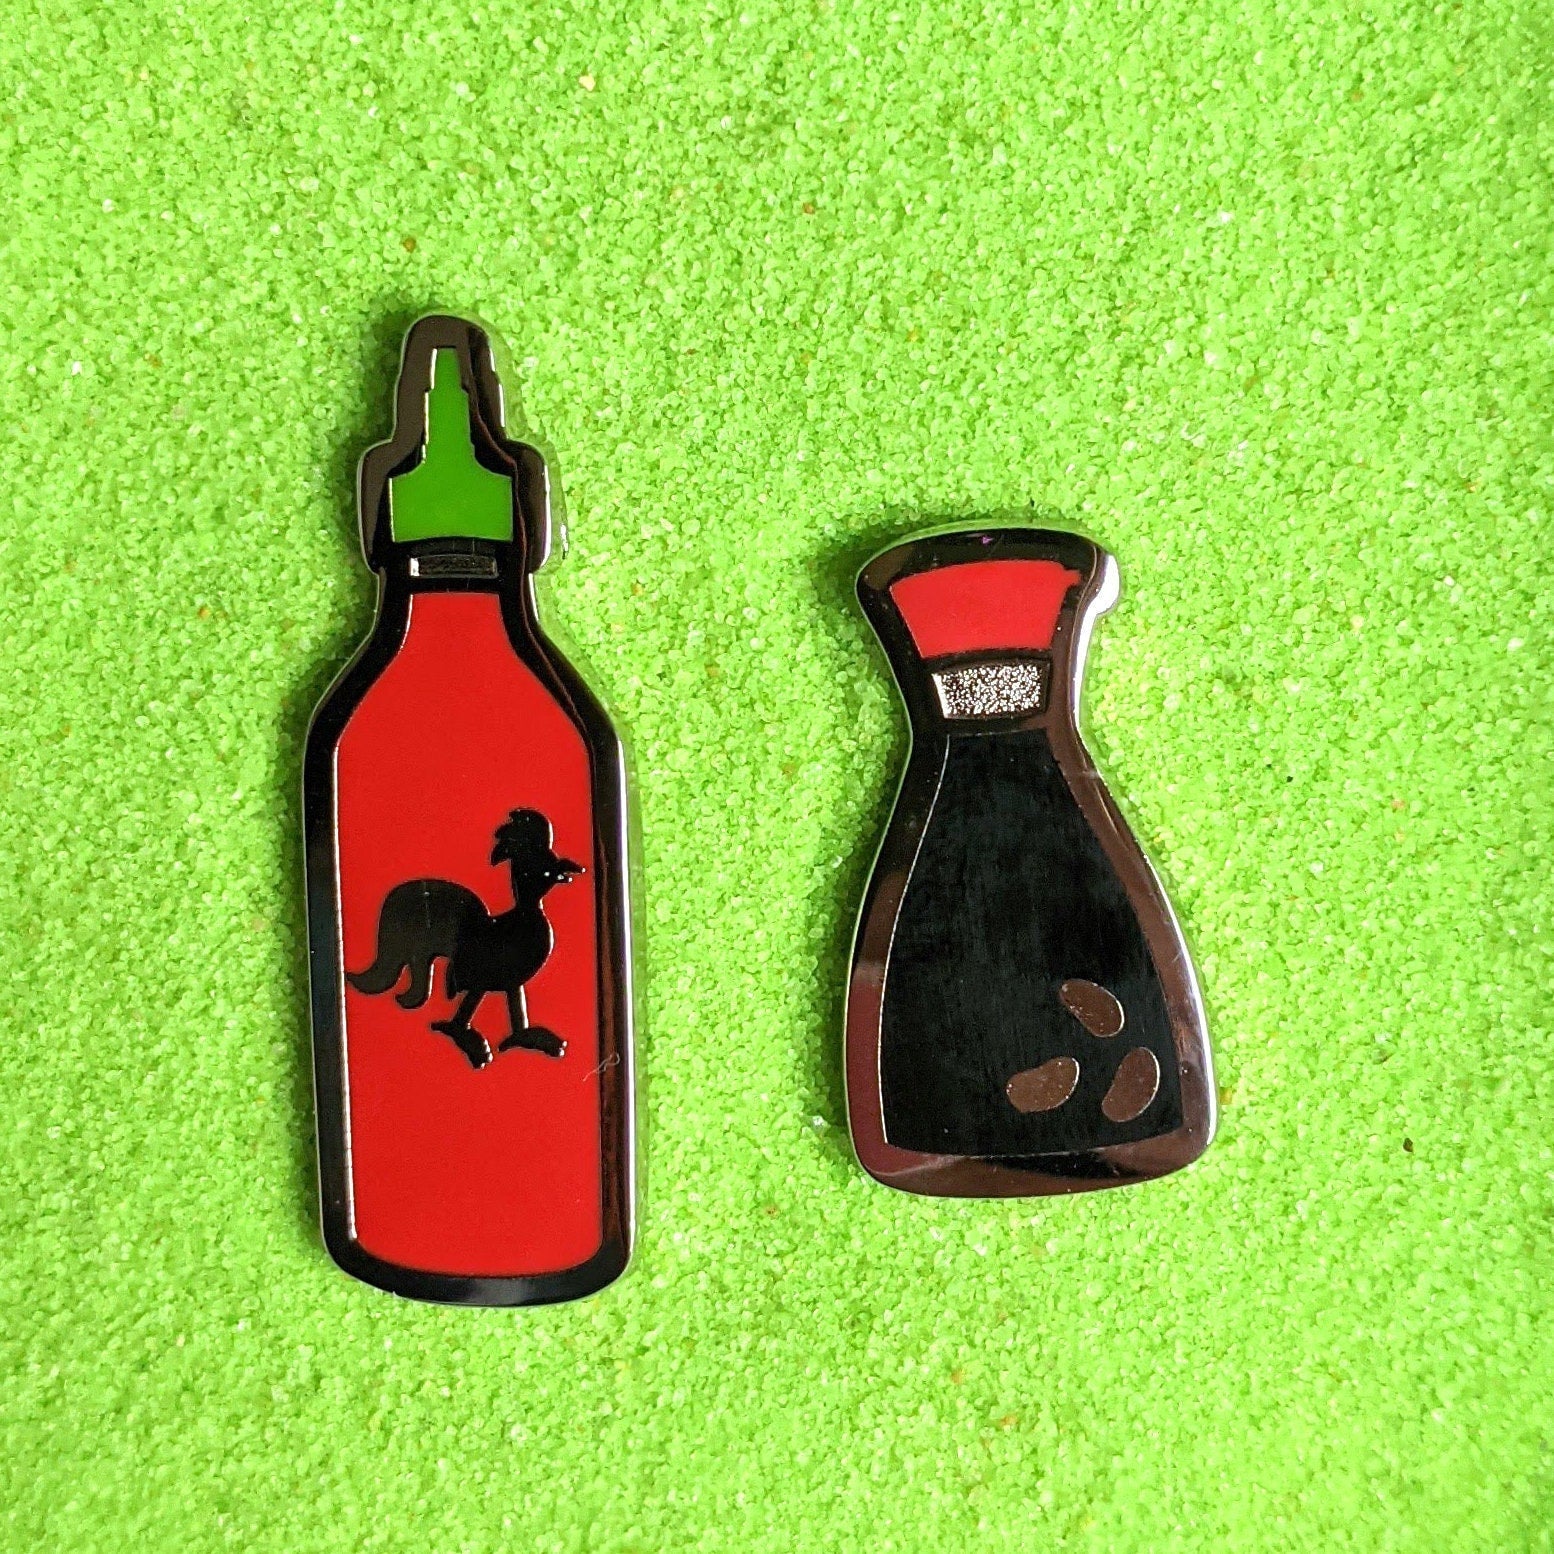 Soy Sauce and Sriracha - 2 Enamel Pins Lapel Metal Badge